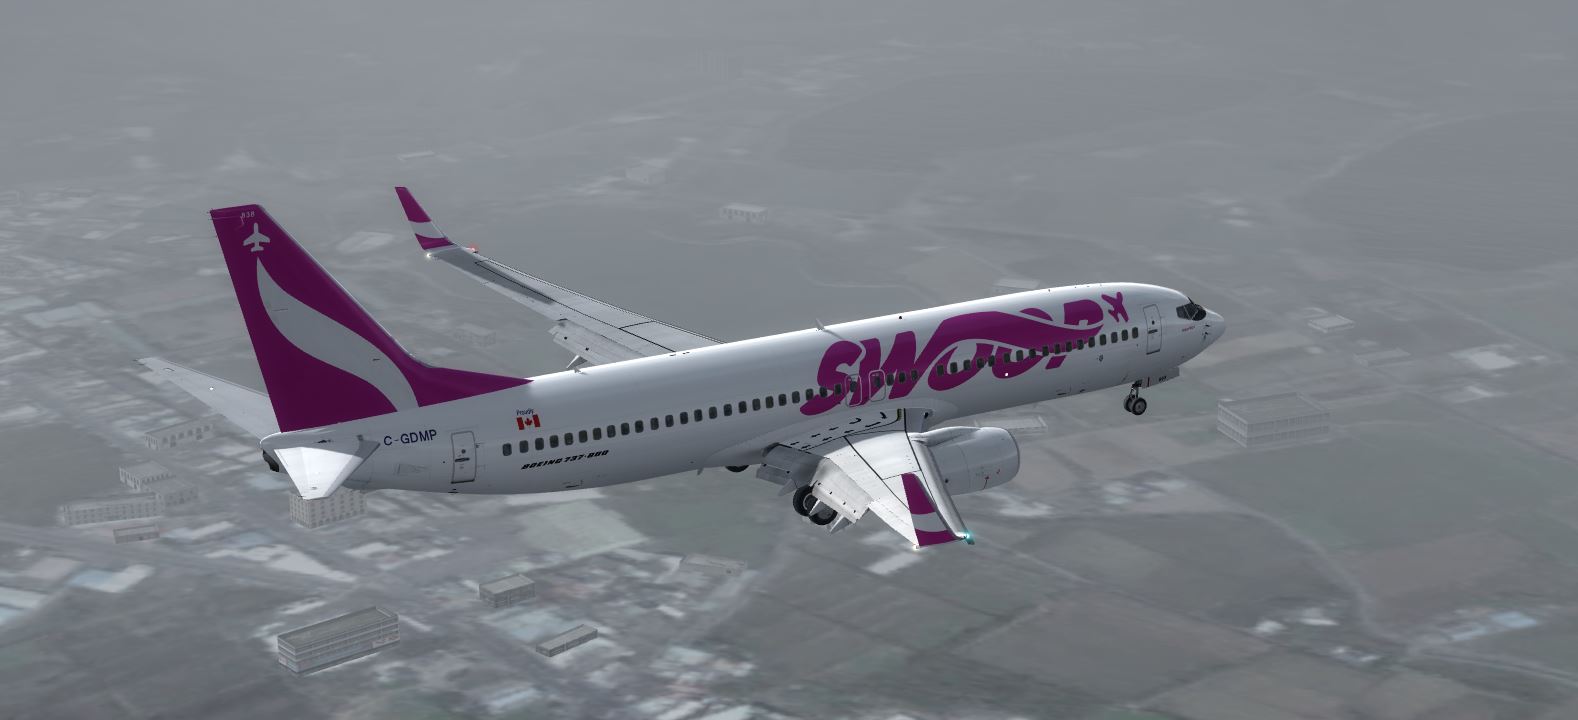 B737-800 Swoop Airlines-4508 